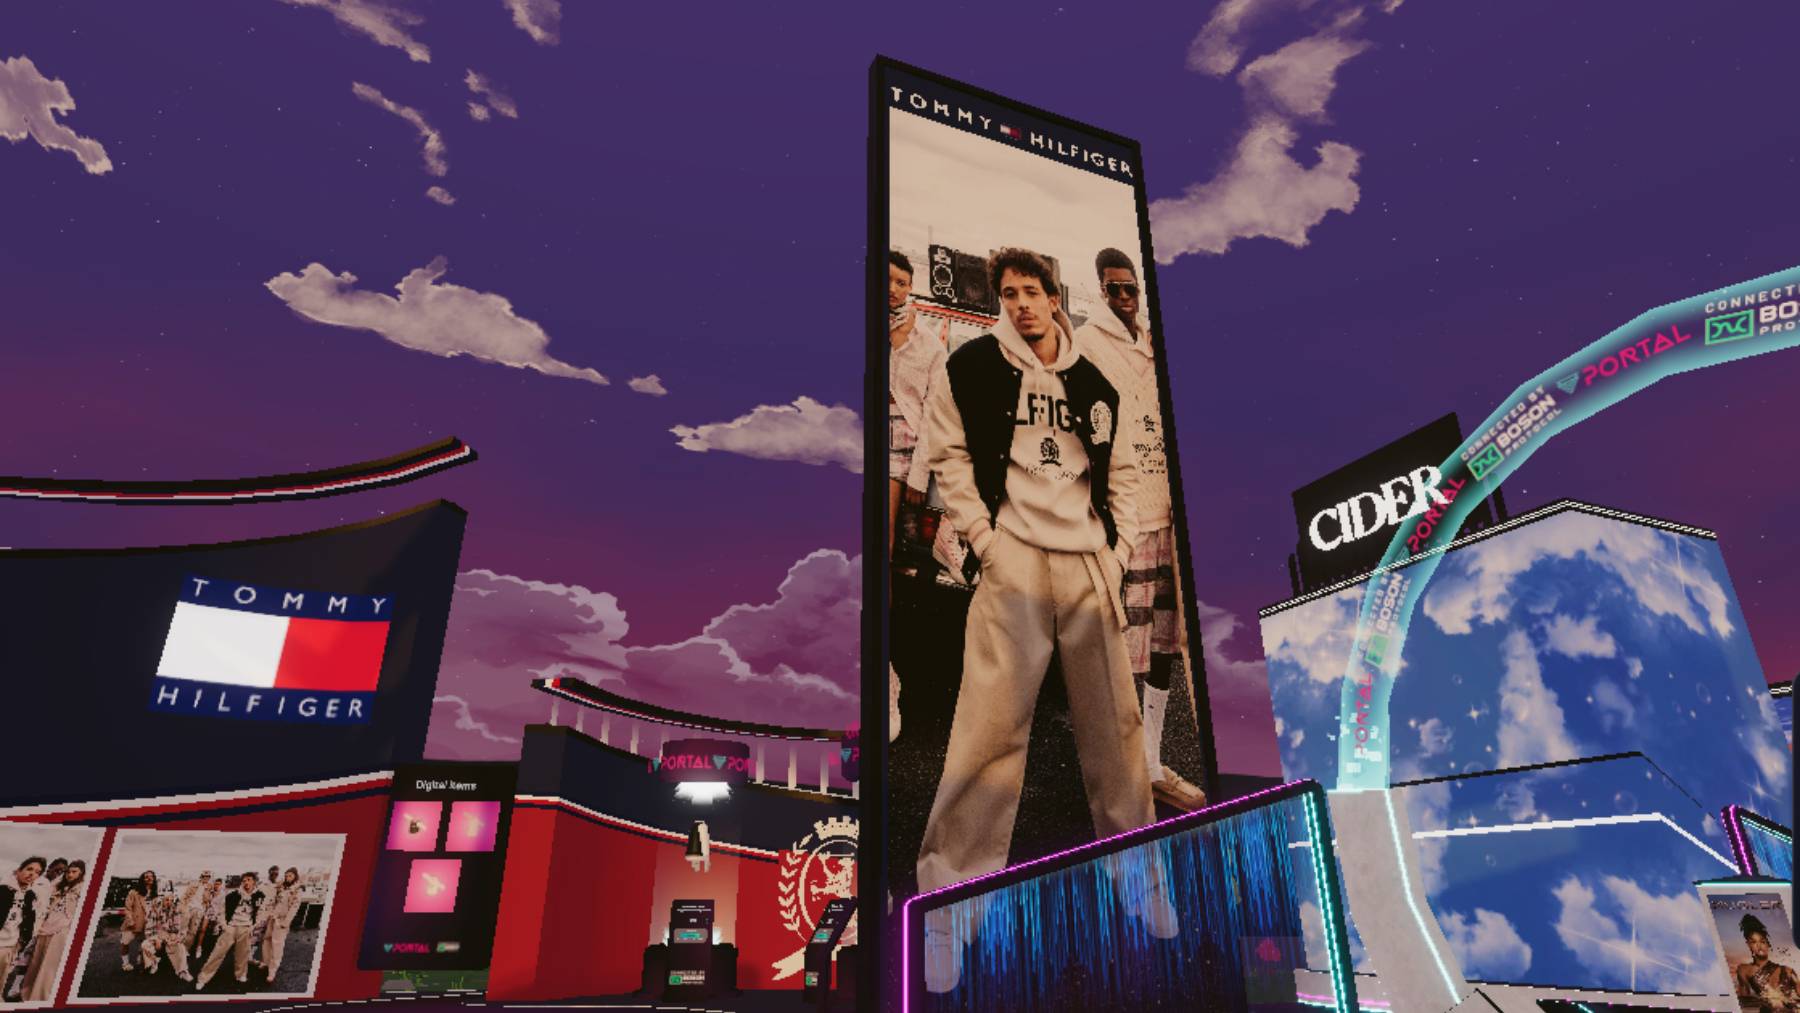 Digital billboards display Tommy Hilfiger campaign imagery in Decentraland.